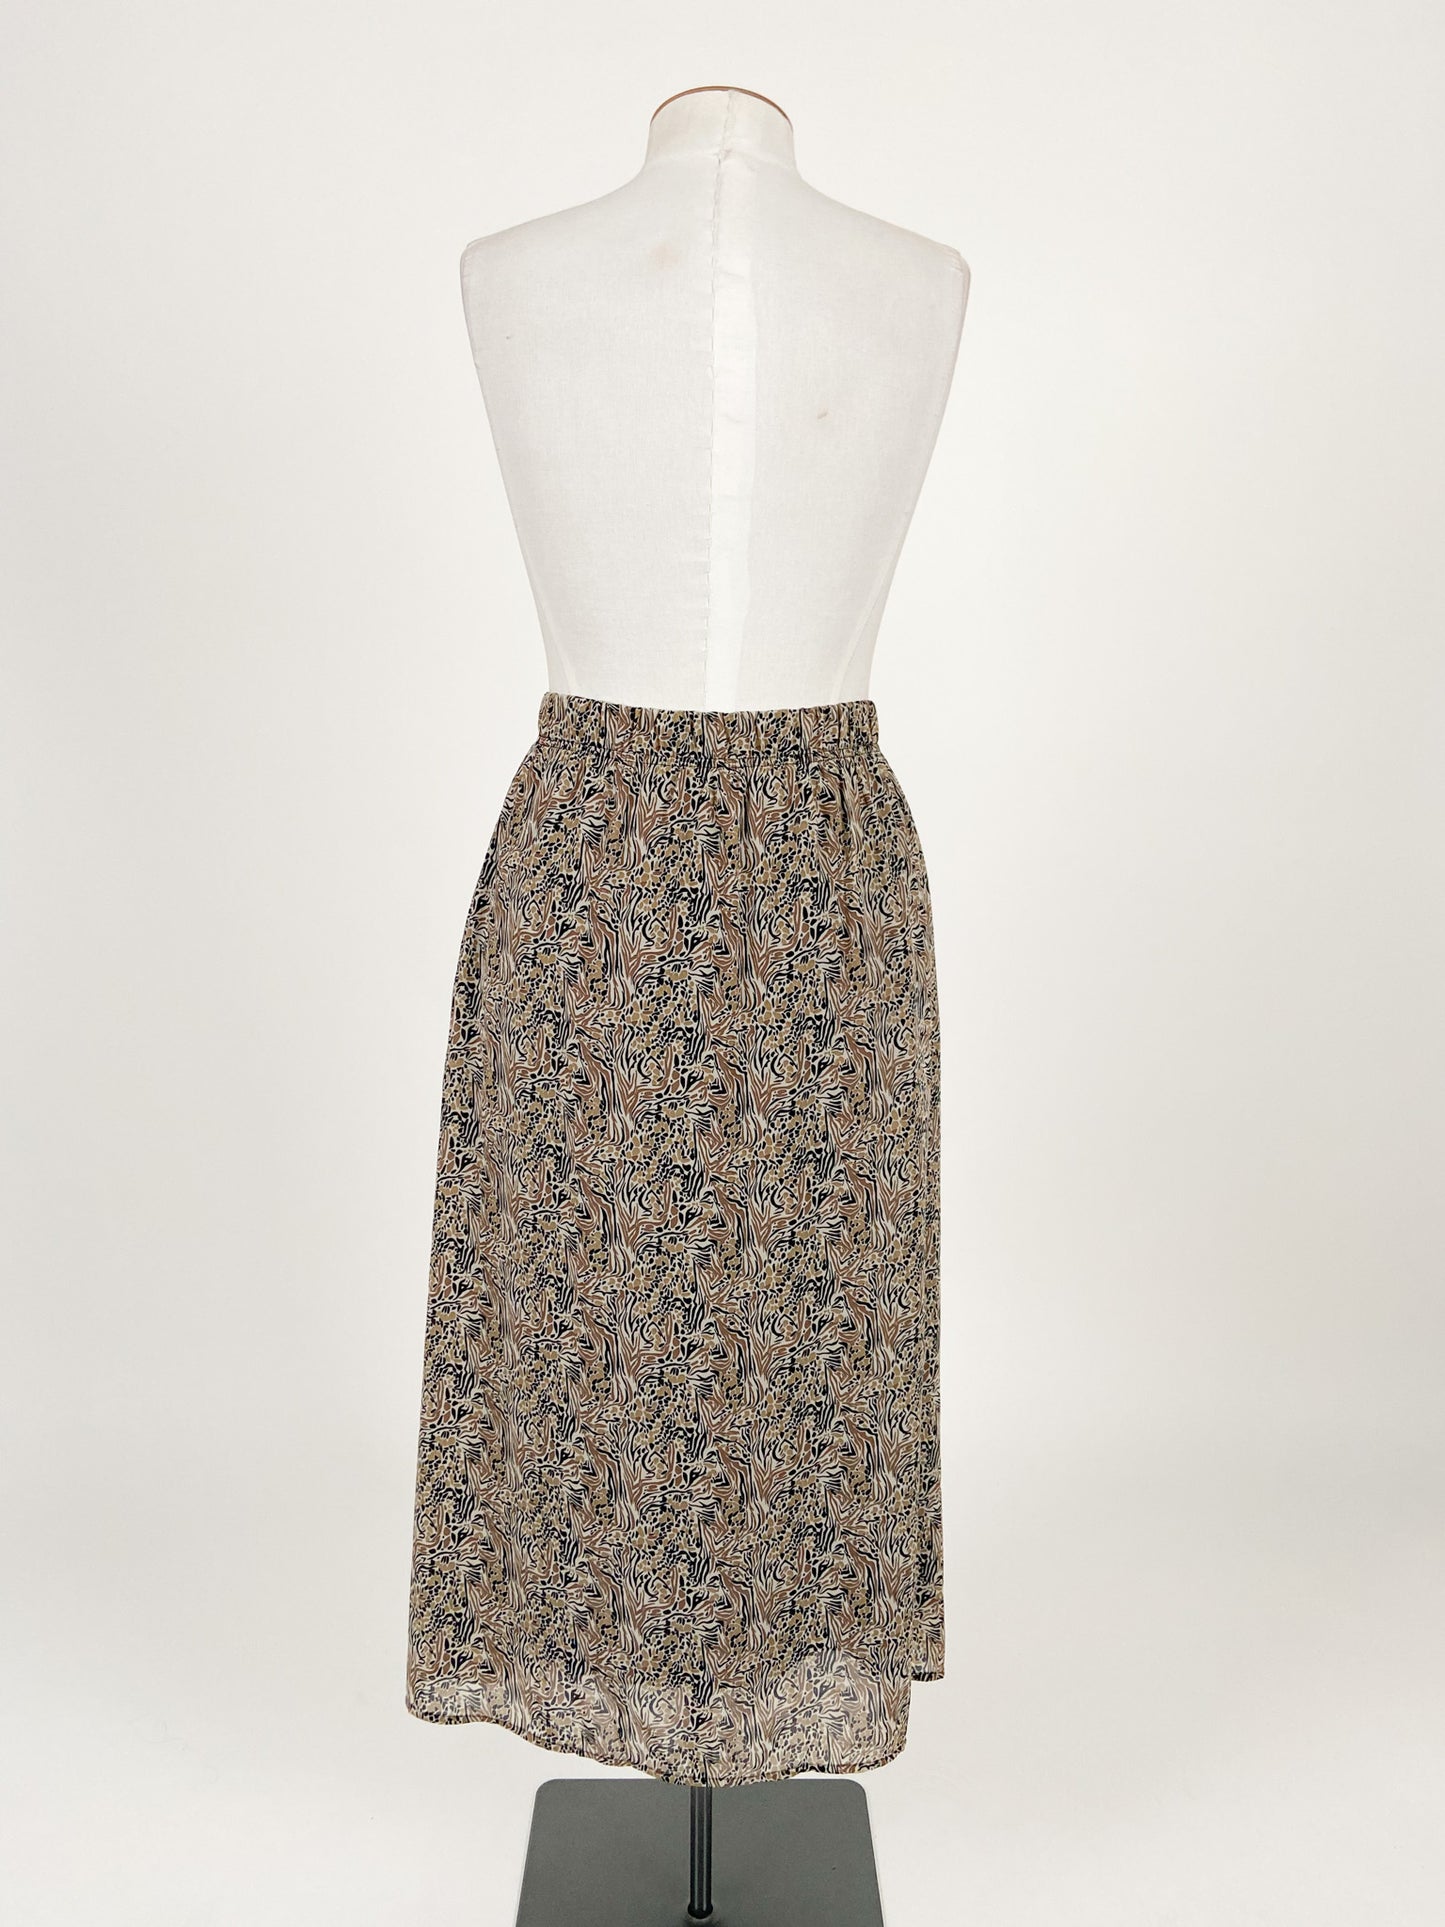 Aware by Vero Moda | Multicoloured Casual/Workwear Skirt | Size XXL